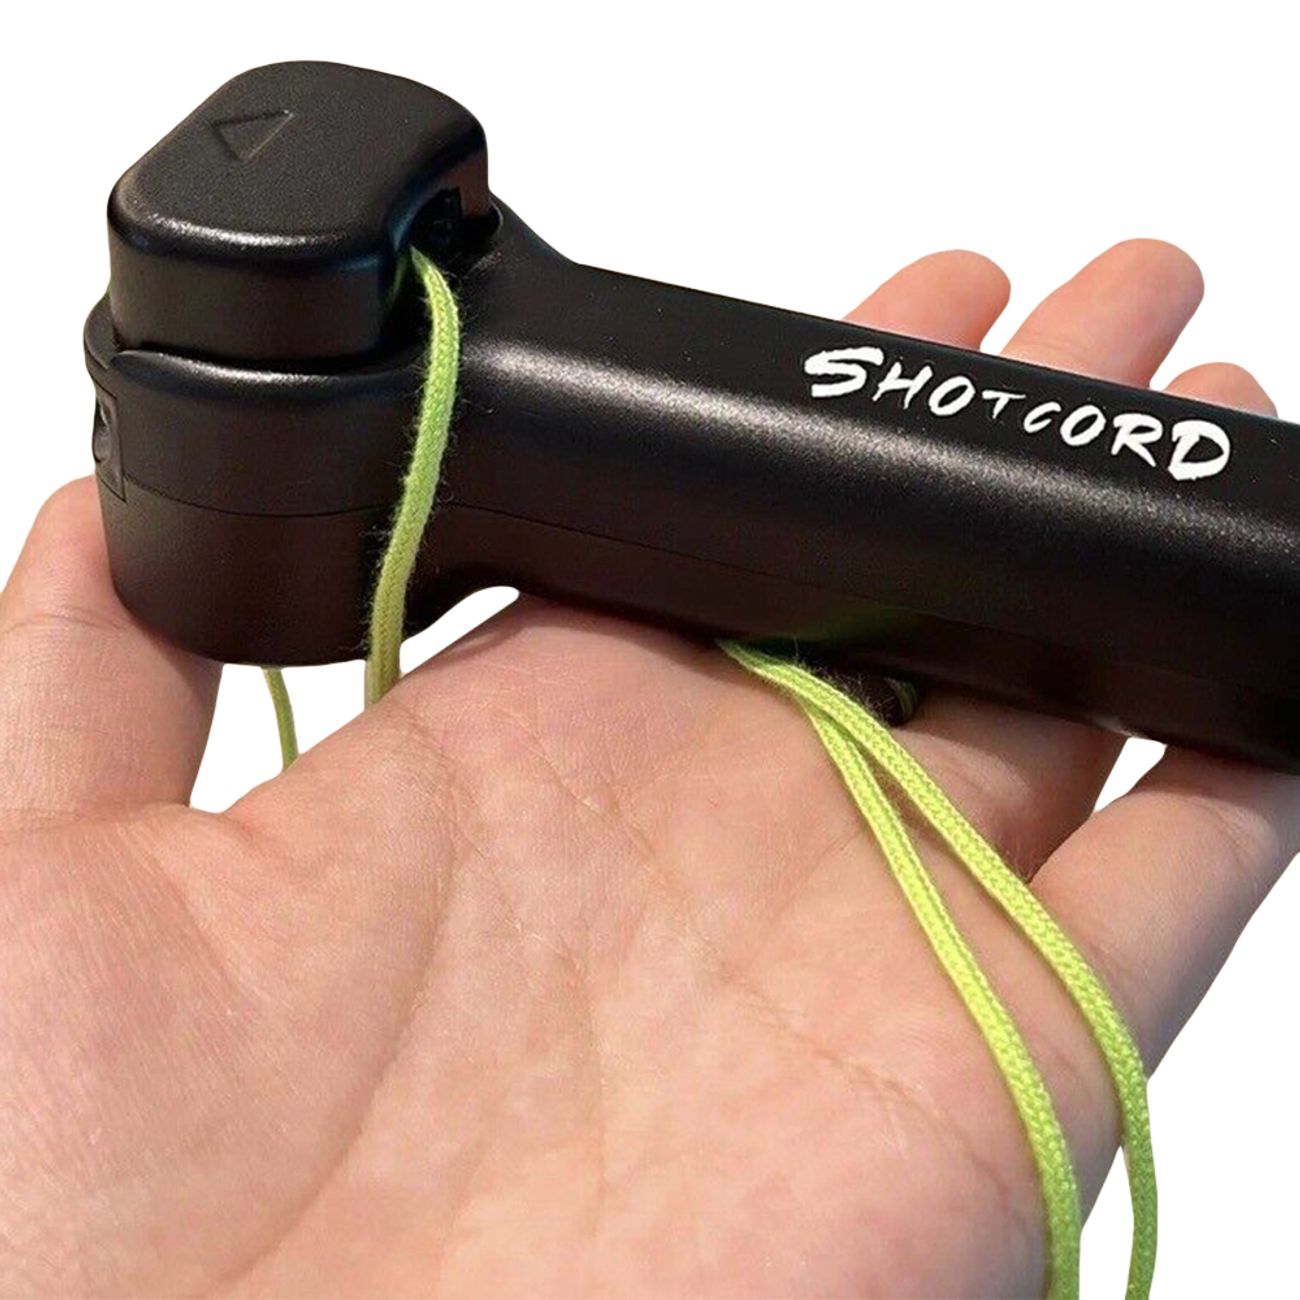 string-loop-shotcord-leksak-99951-3